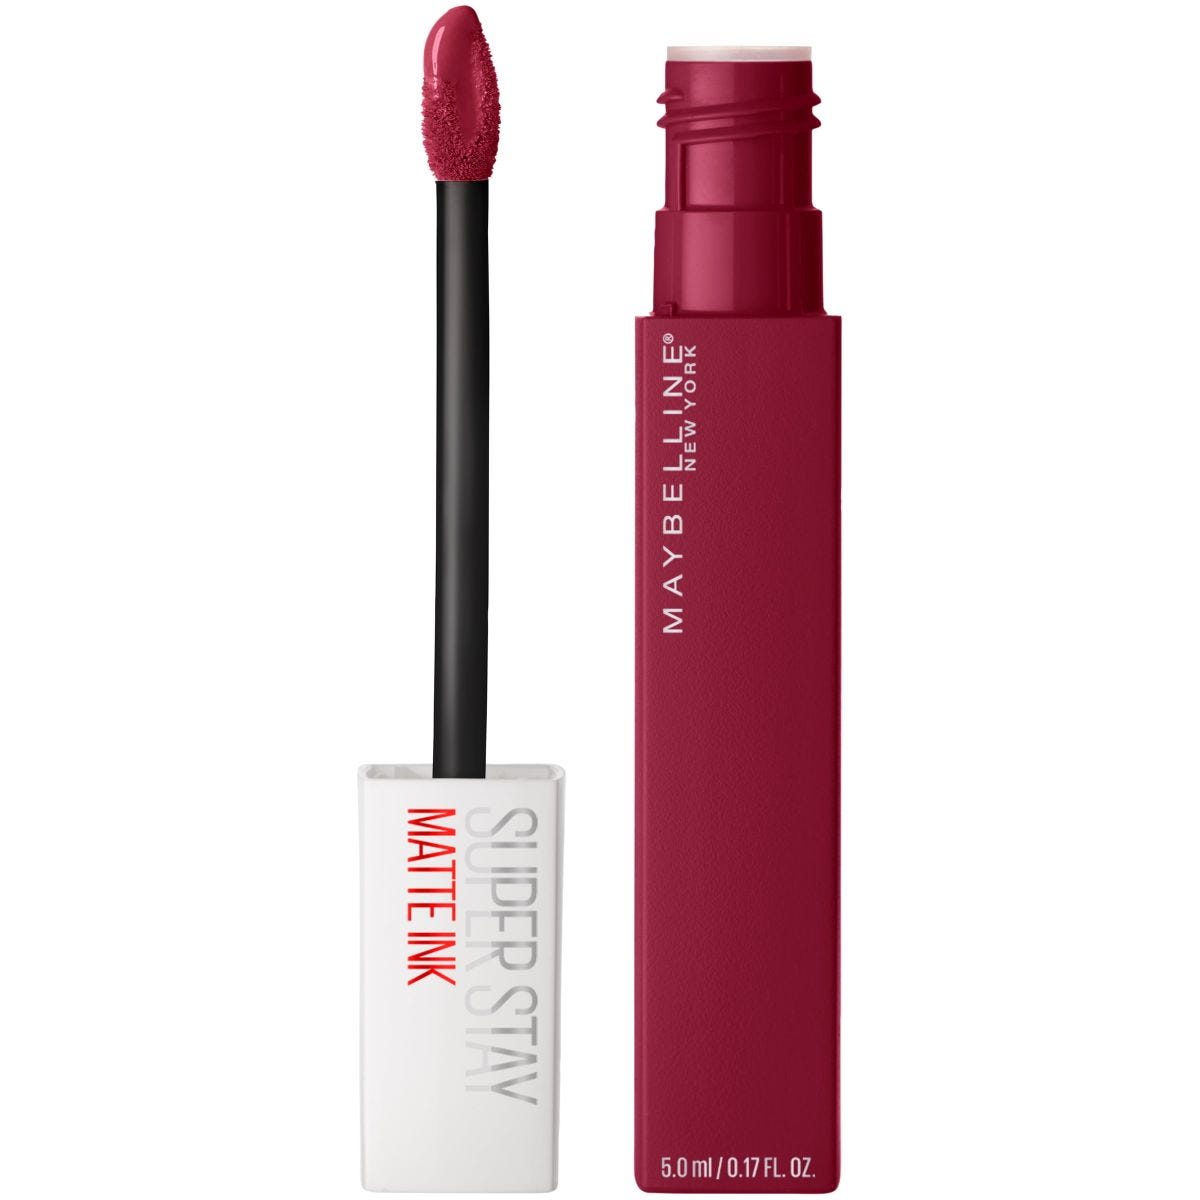 Maybelline SuperStay Matte Ink City Edition Liquid Lipstick Makeup, Founder, 0.17 fl. oz ...